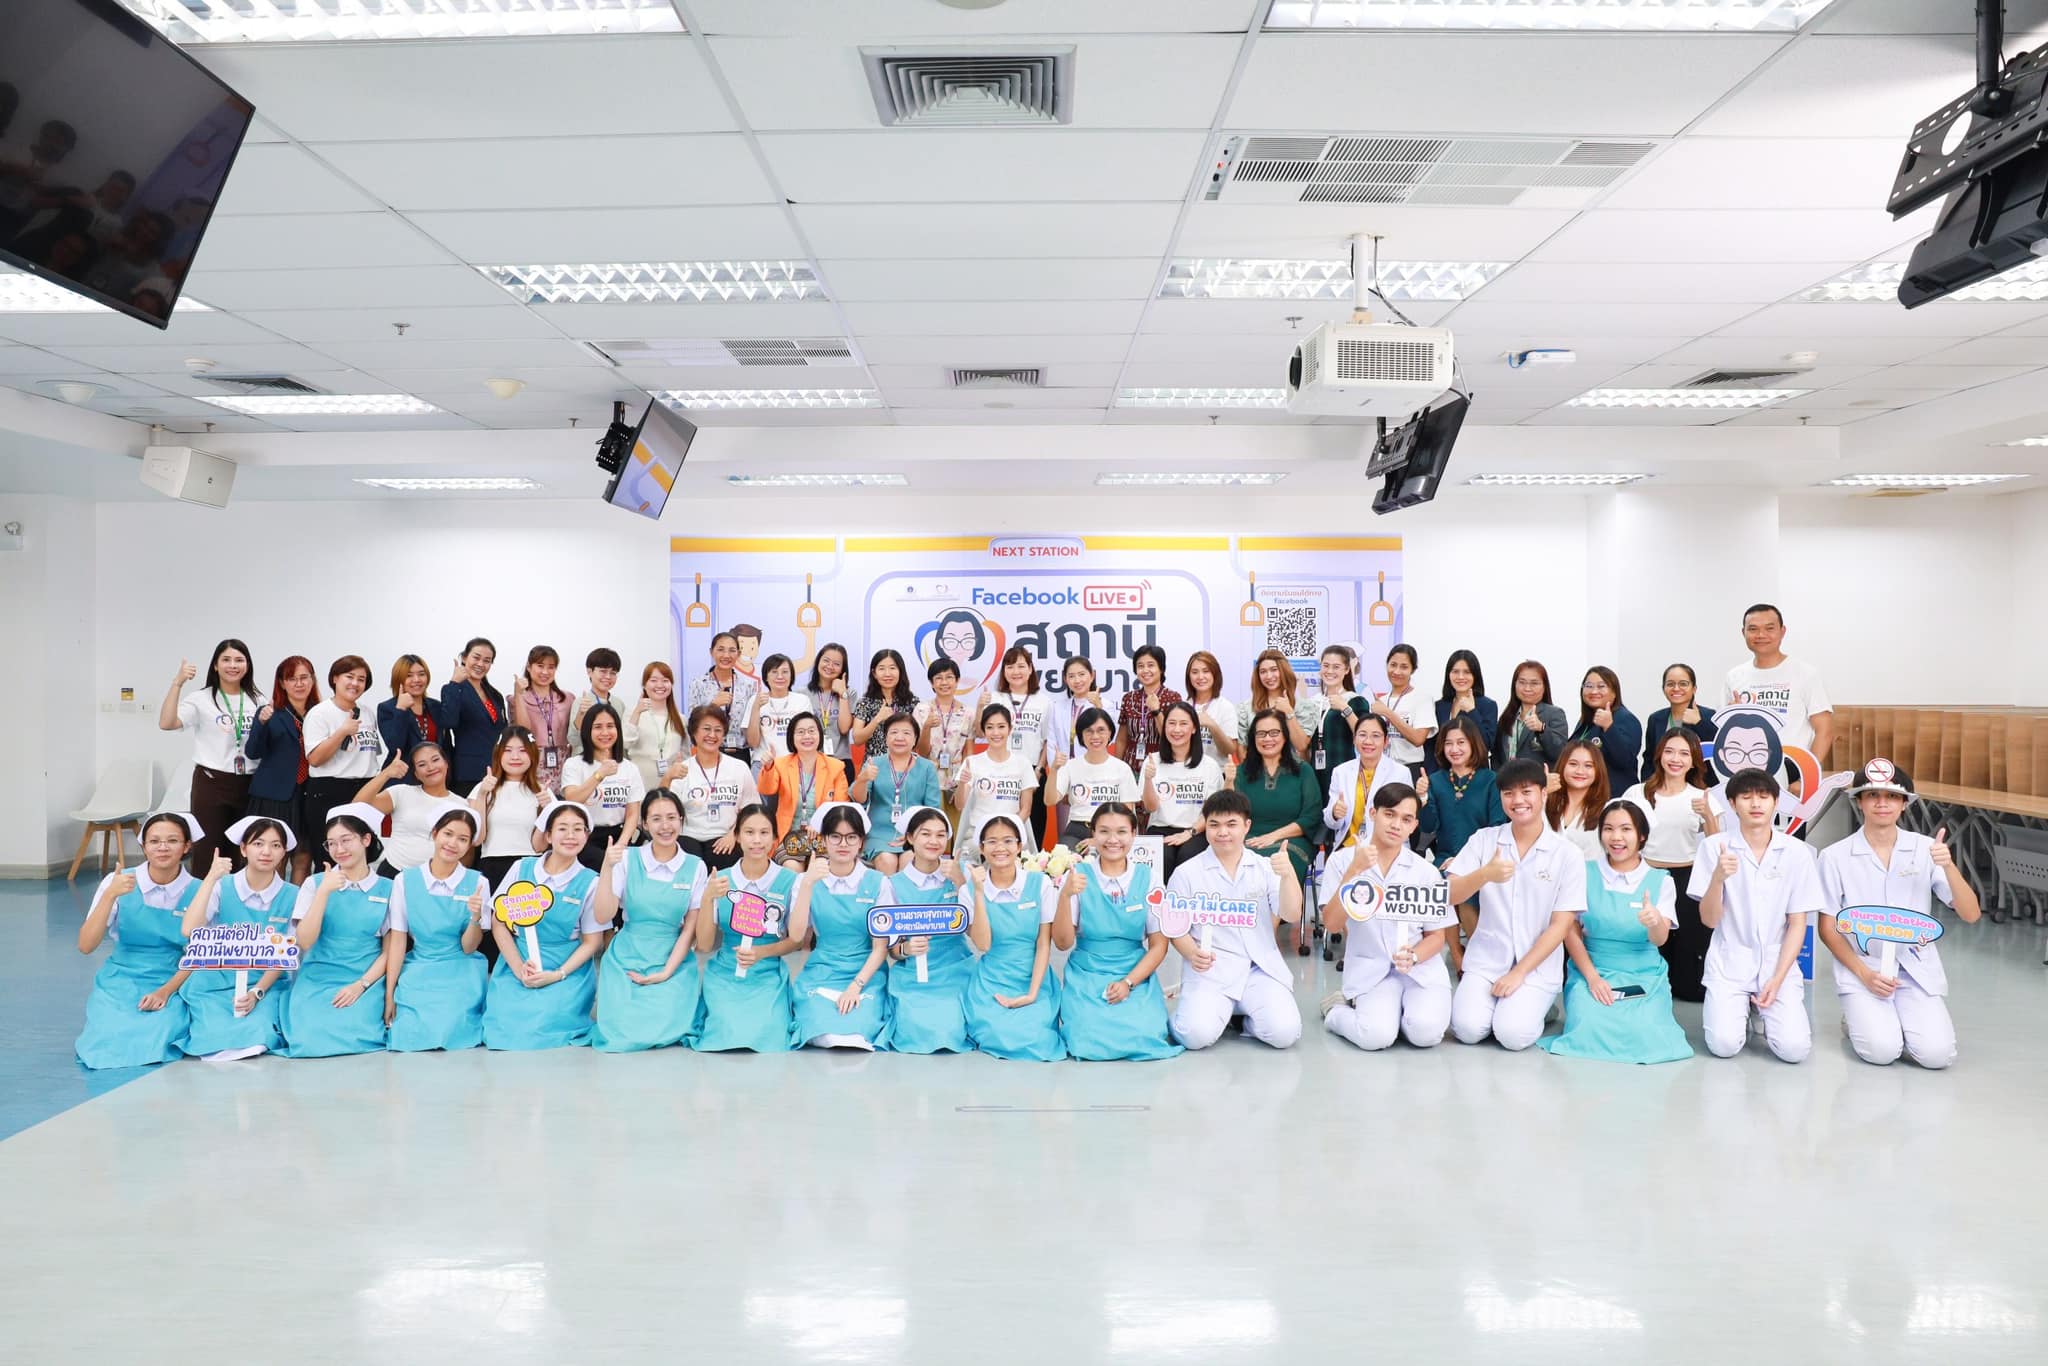 Ramathibodi School of Nursing, Faculty of Medicine Ramathibodi Hospital, Mahidol University, held a press conference to launch the program “Nurse Station by Ramathibodi Nursing Faculty.”